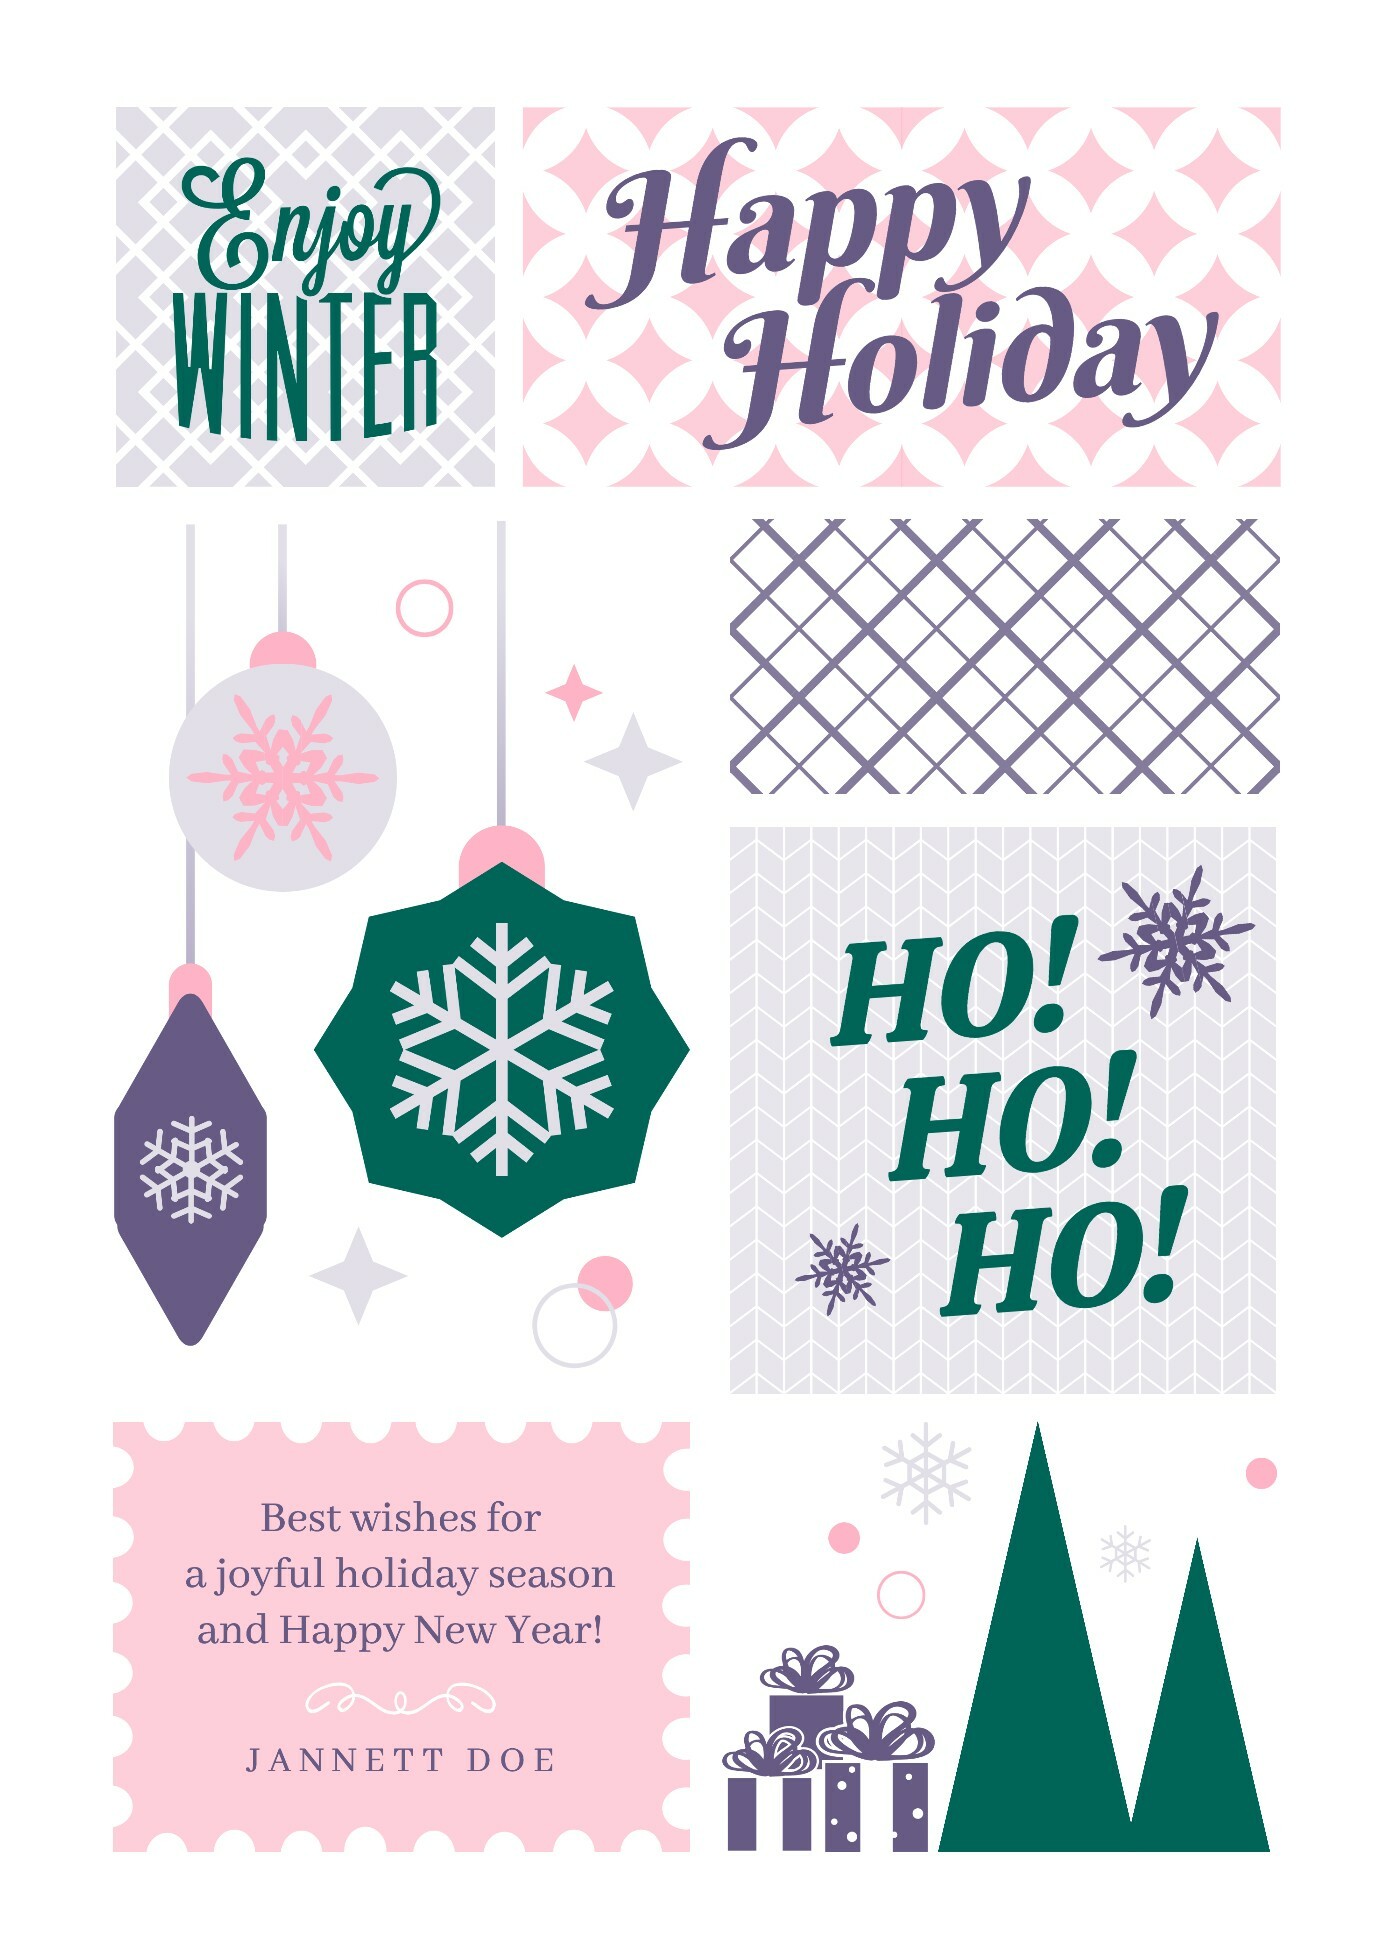 Winter Holidays Theme Greeting Card